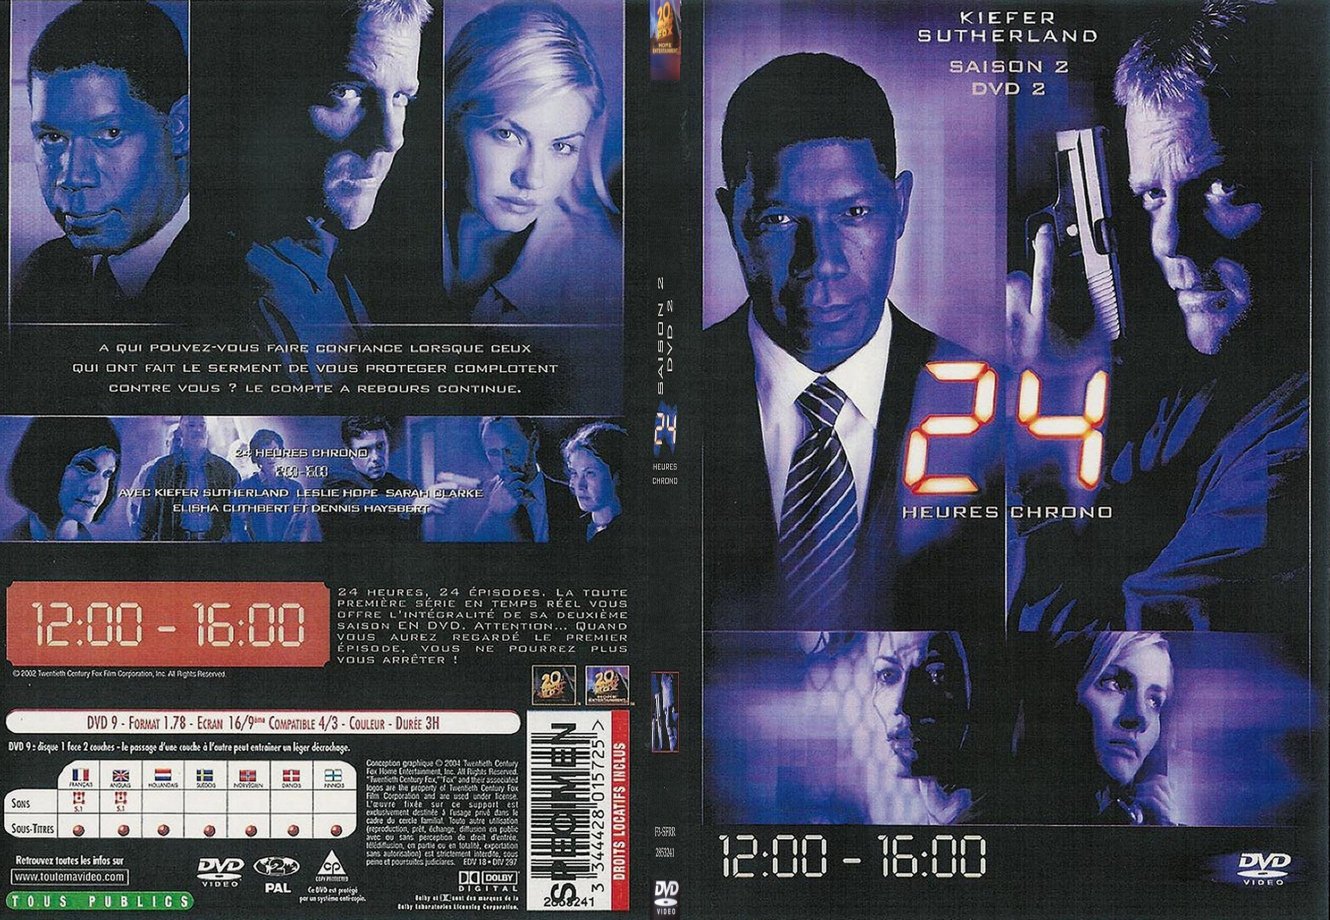 Jaquette DVD 24 heures chrono Saison 2 dvd 2 - SLIM